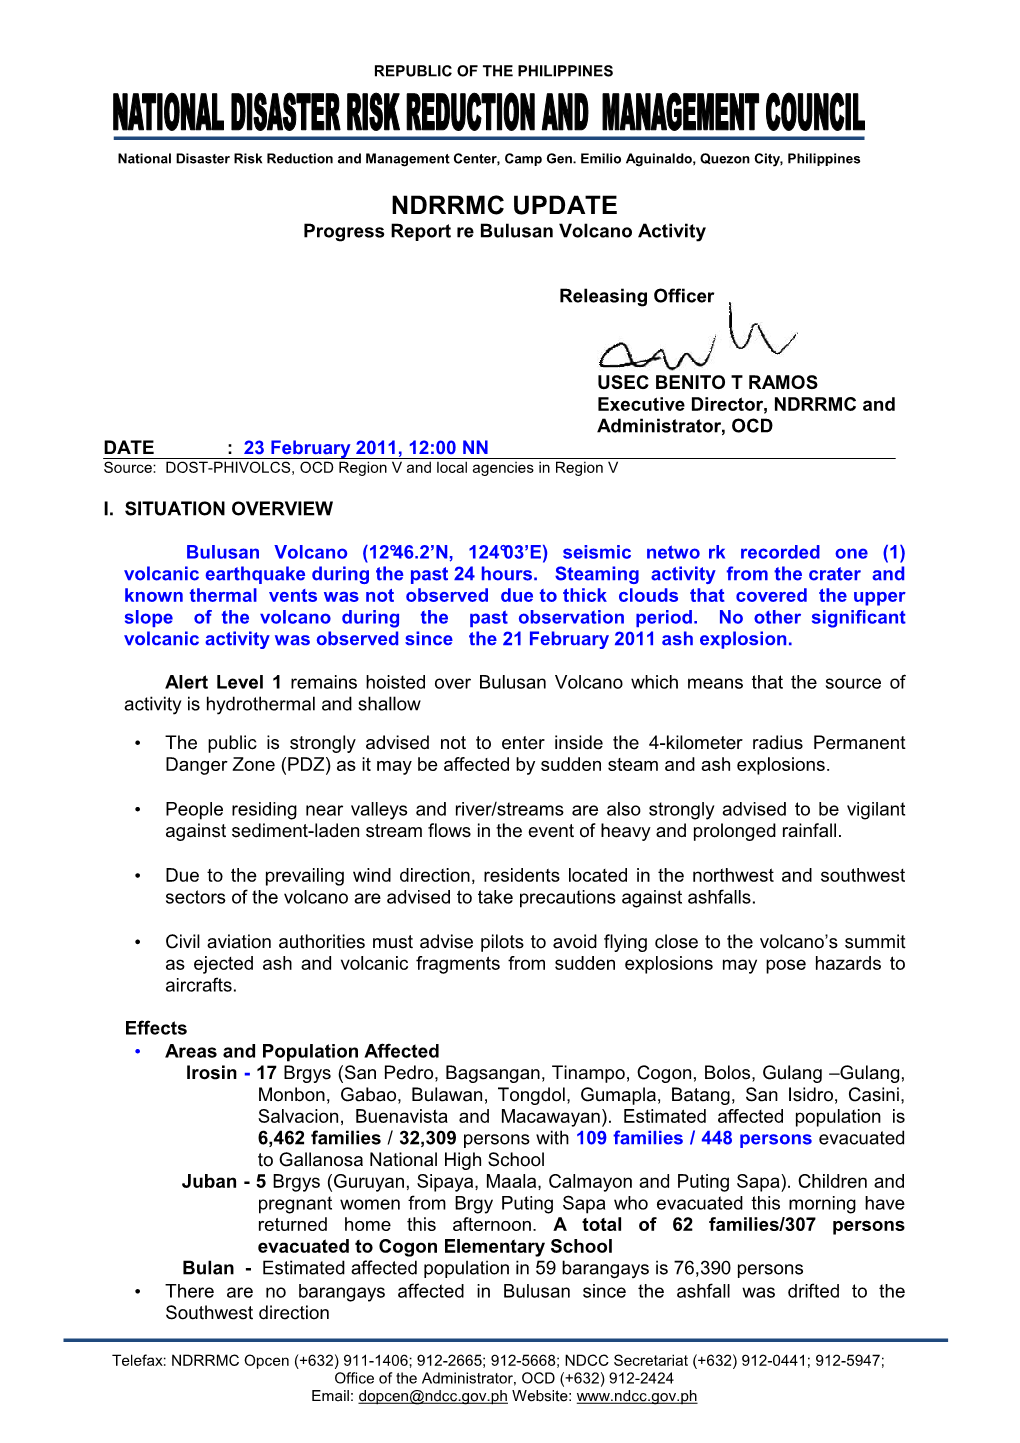 NDRRMC Update on Bulusan Volcano Bulletin 23 February 2011